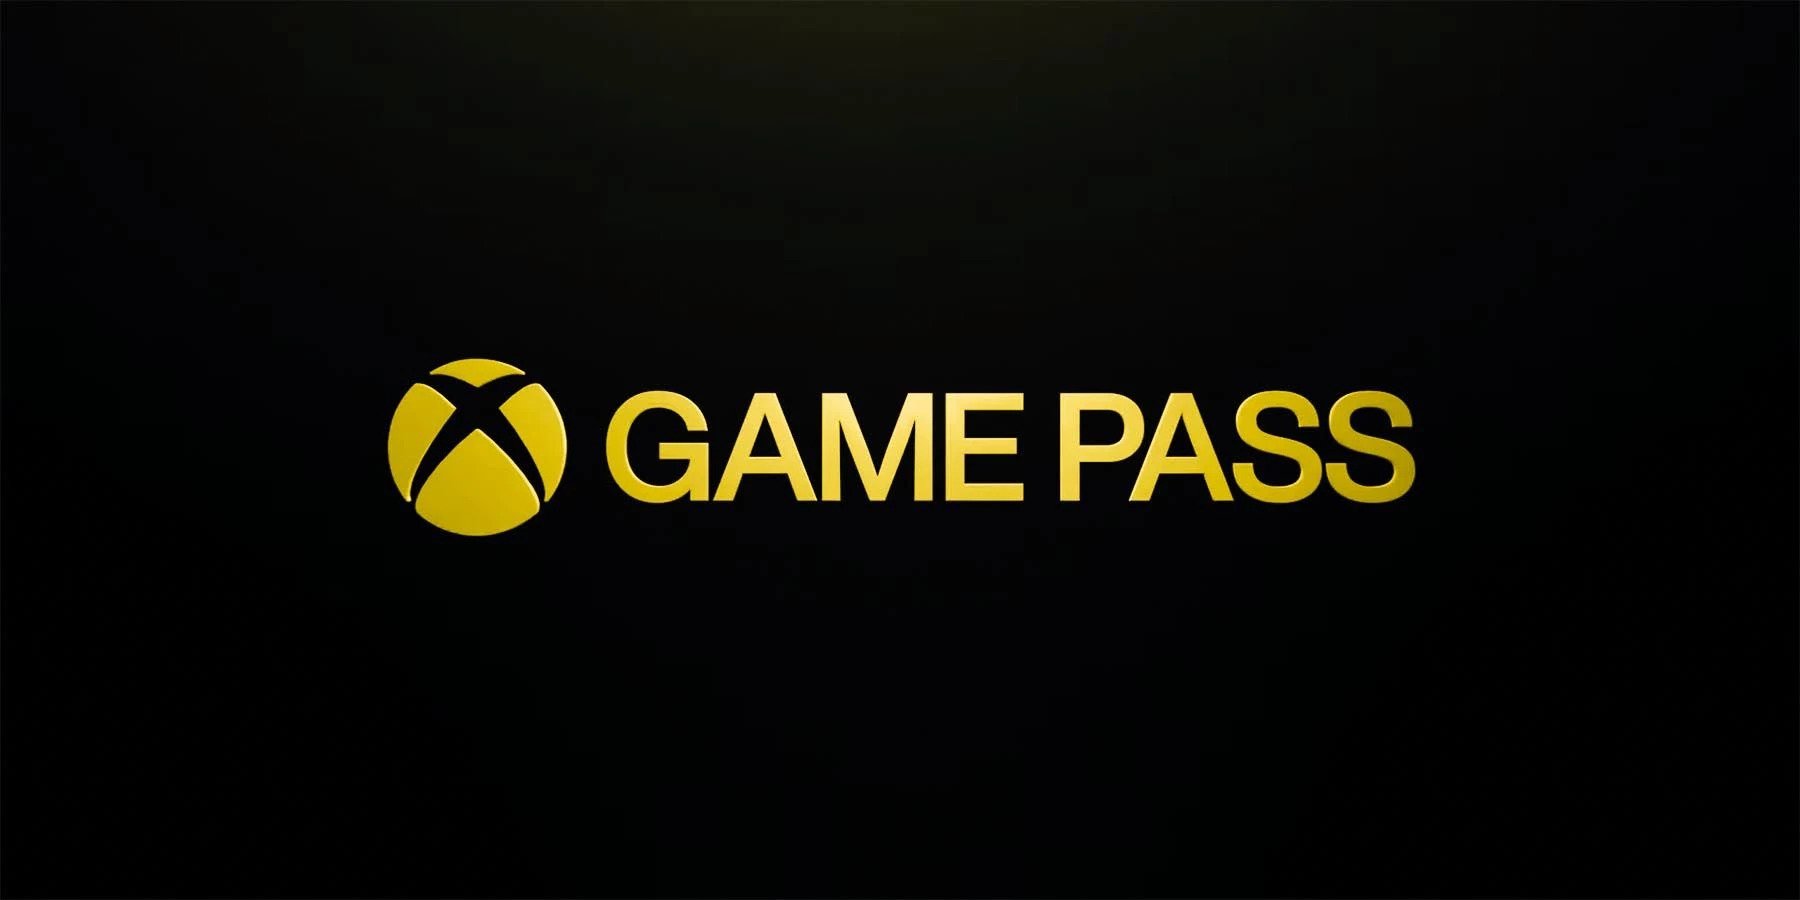 ТОП-11 игр из Game Pass для Хэллоуина по версии команды Xbox